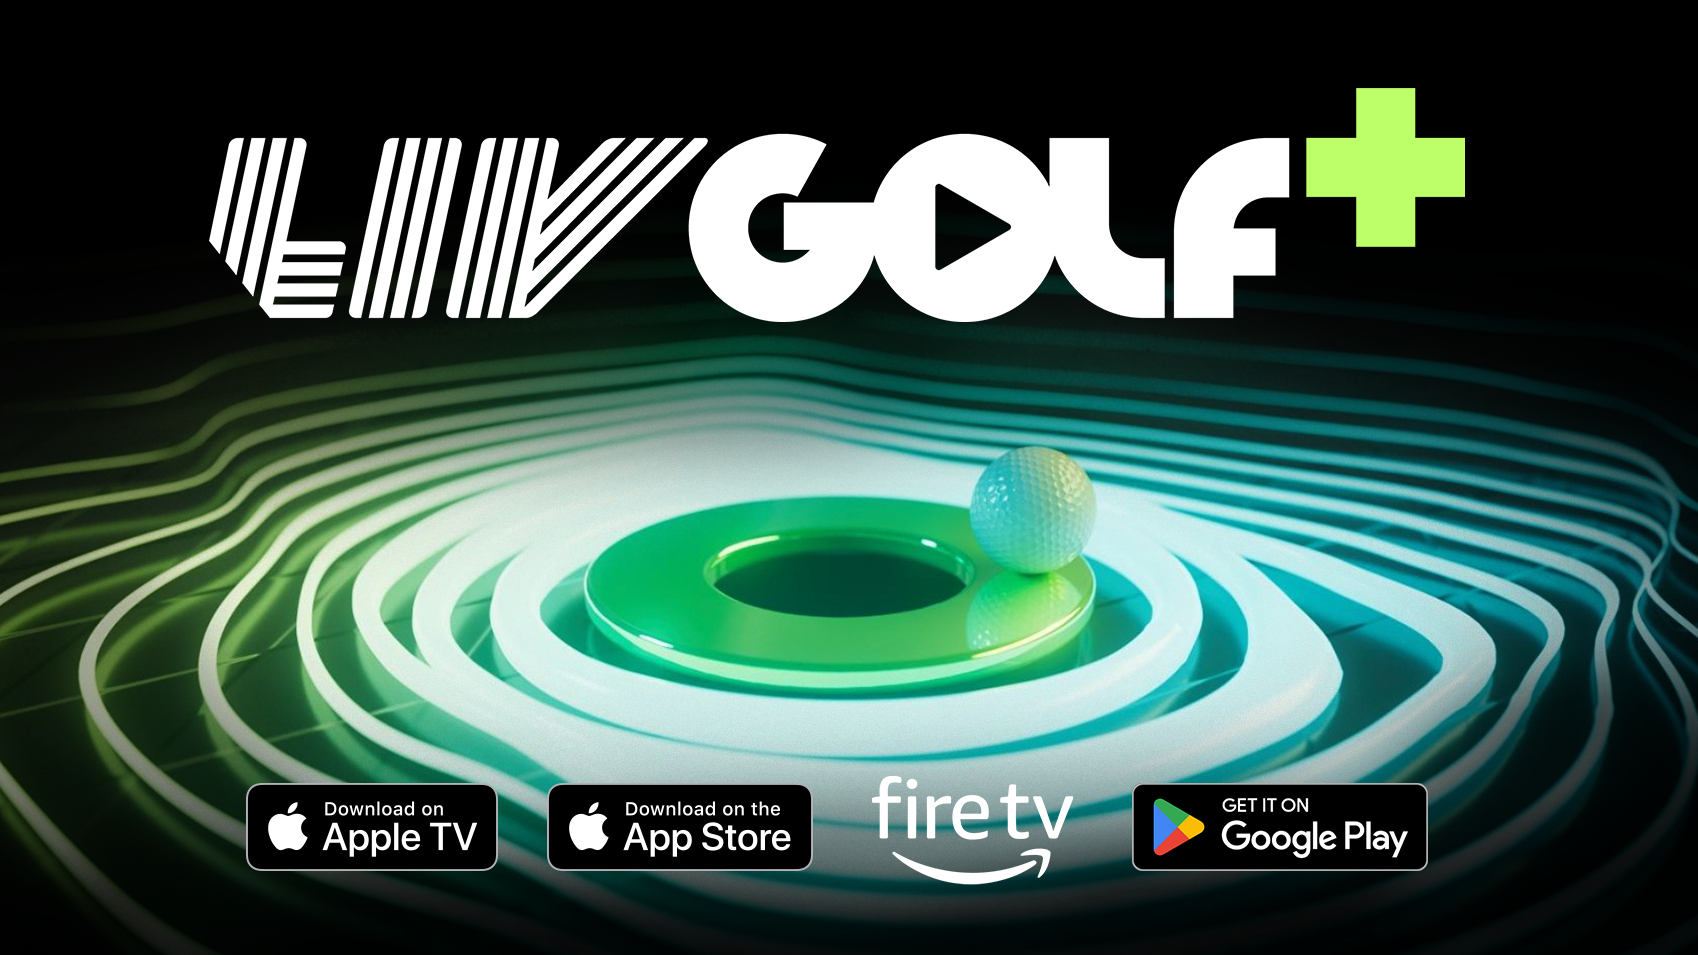 GOLF APP BRINGS LEAGUE TO AUDIENCES LIV Golf